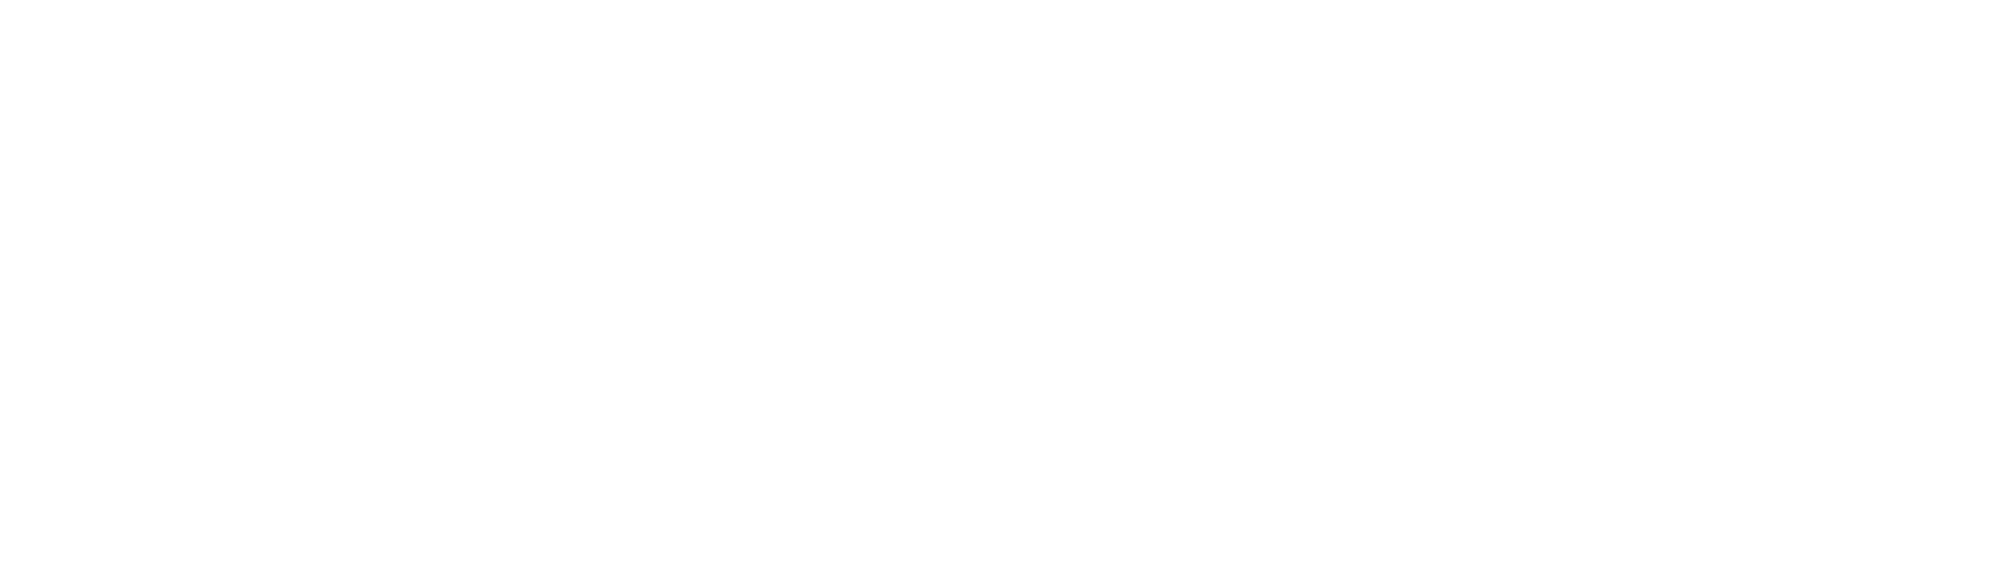 Kansas City Funeral Directors Logo